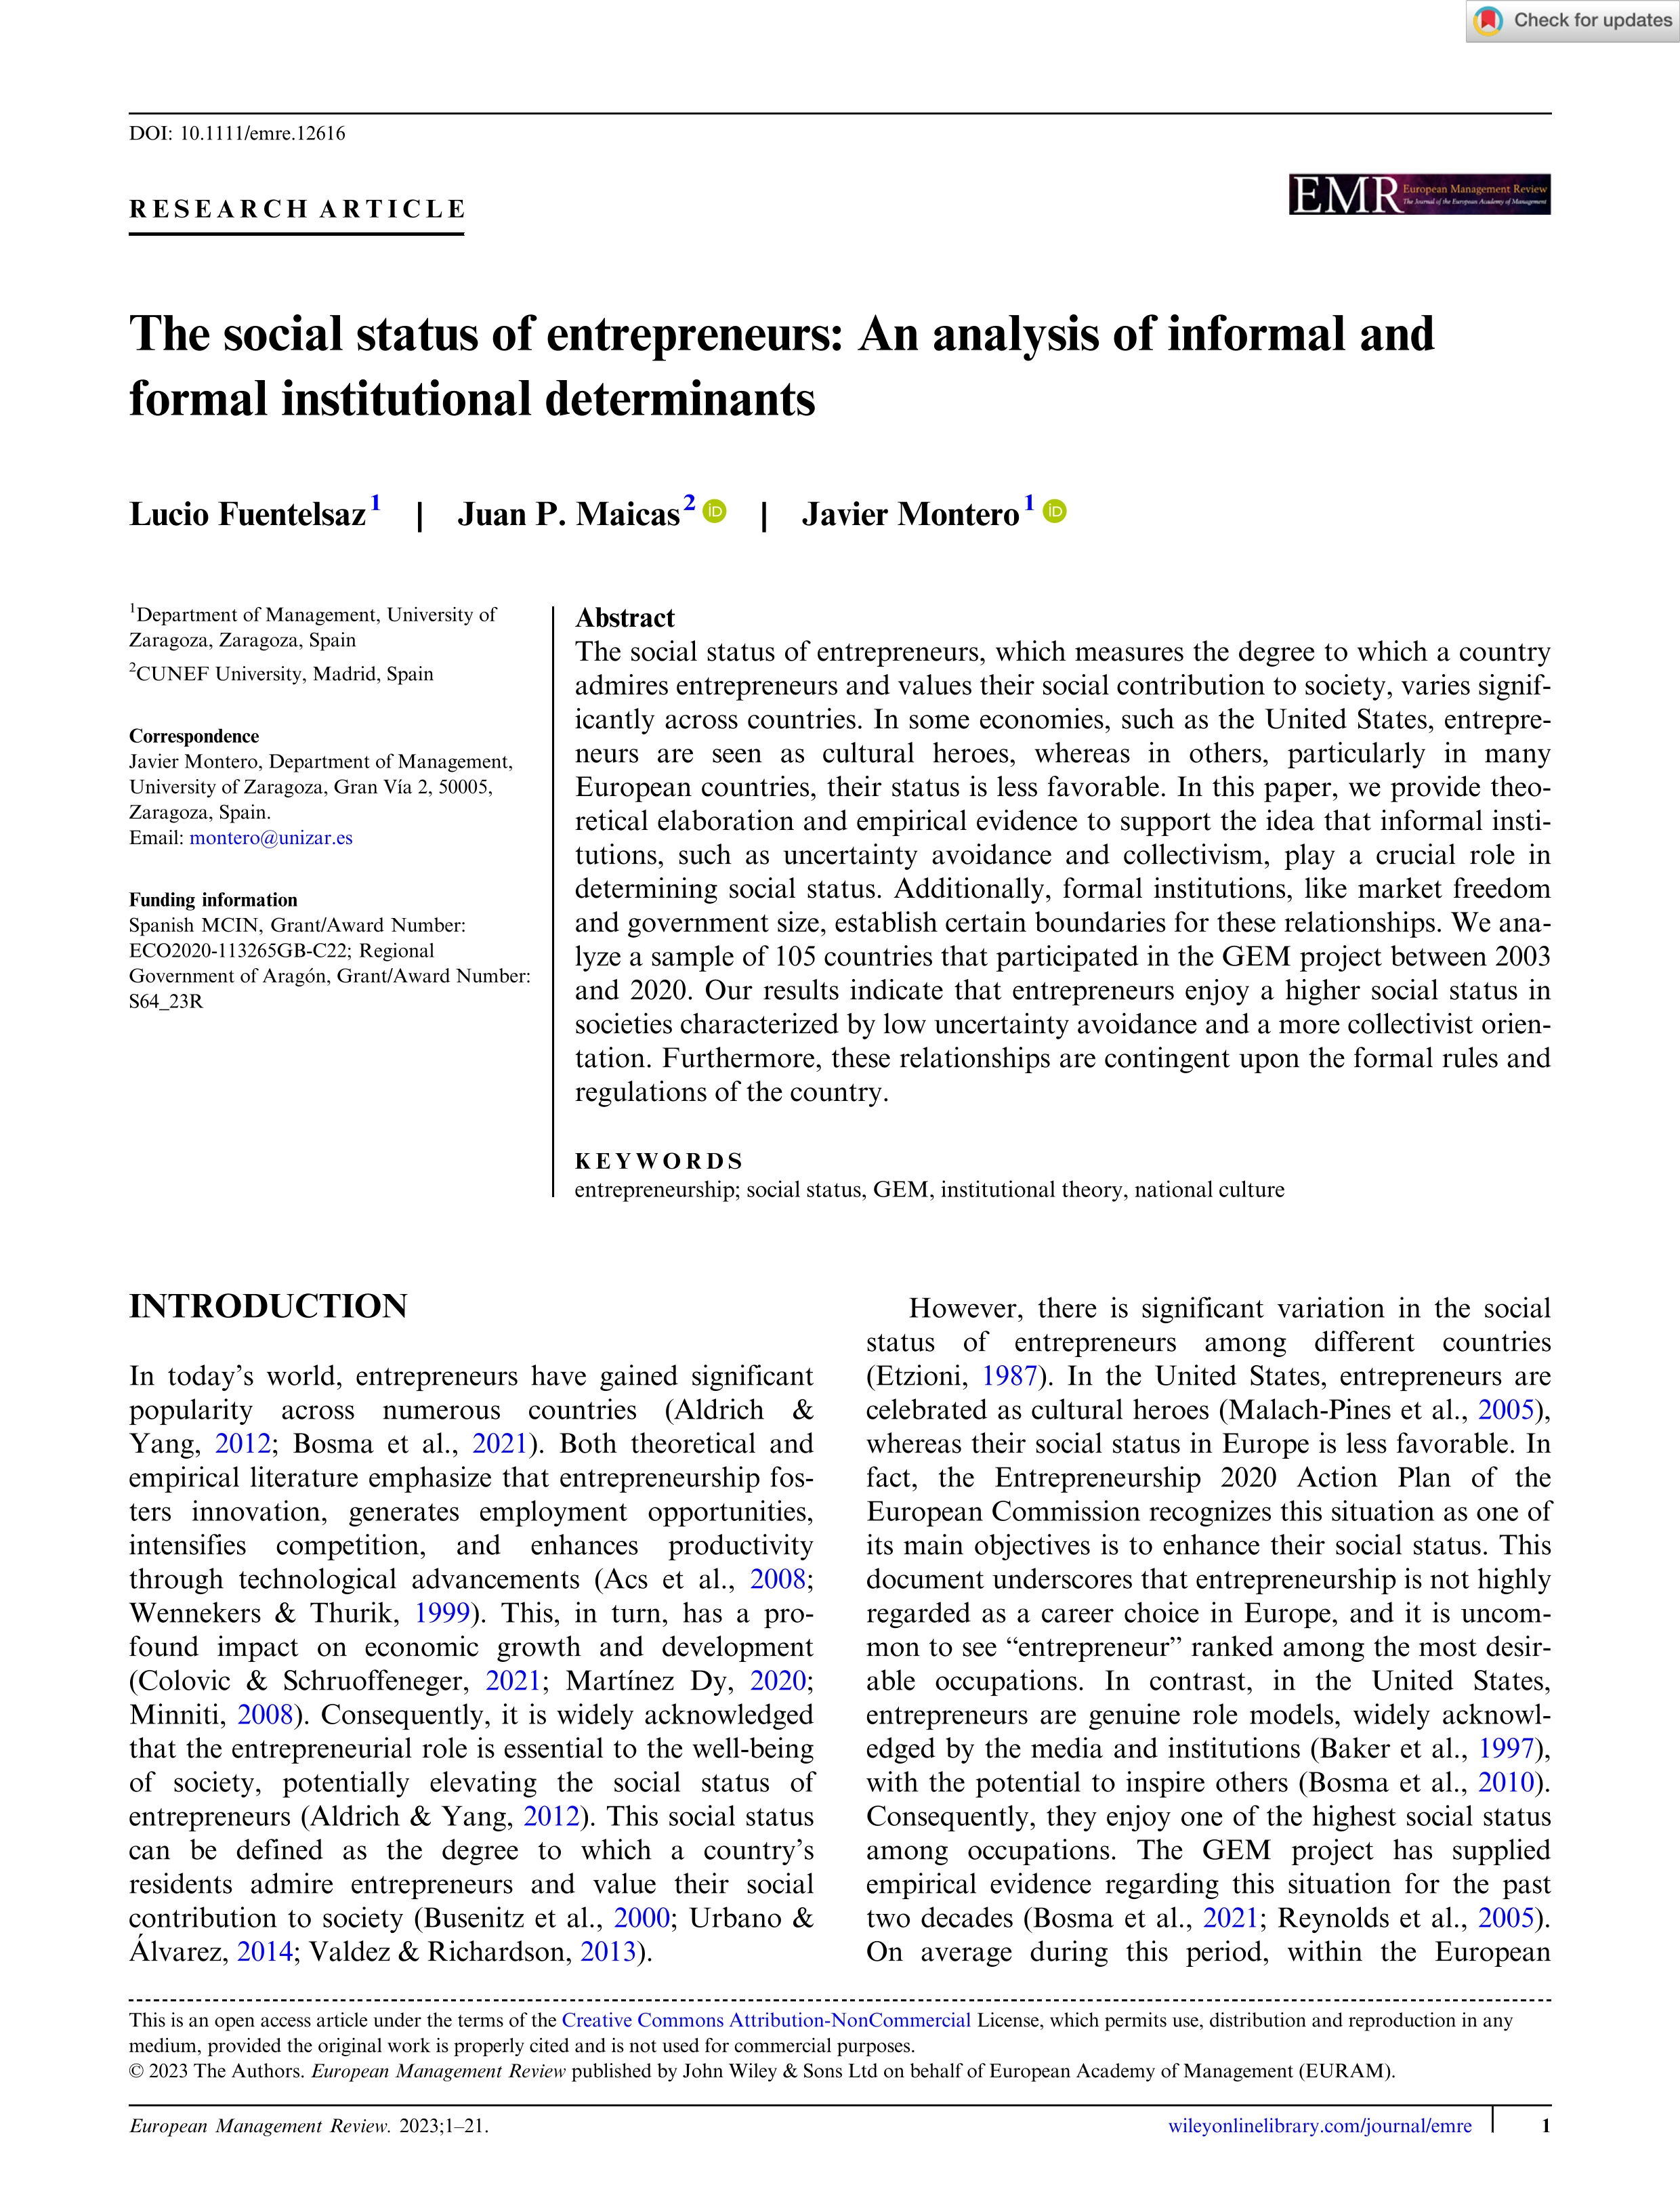 The social status of entrepreneurs: An analysis of informal and formal institutional determinants